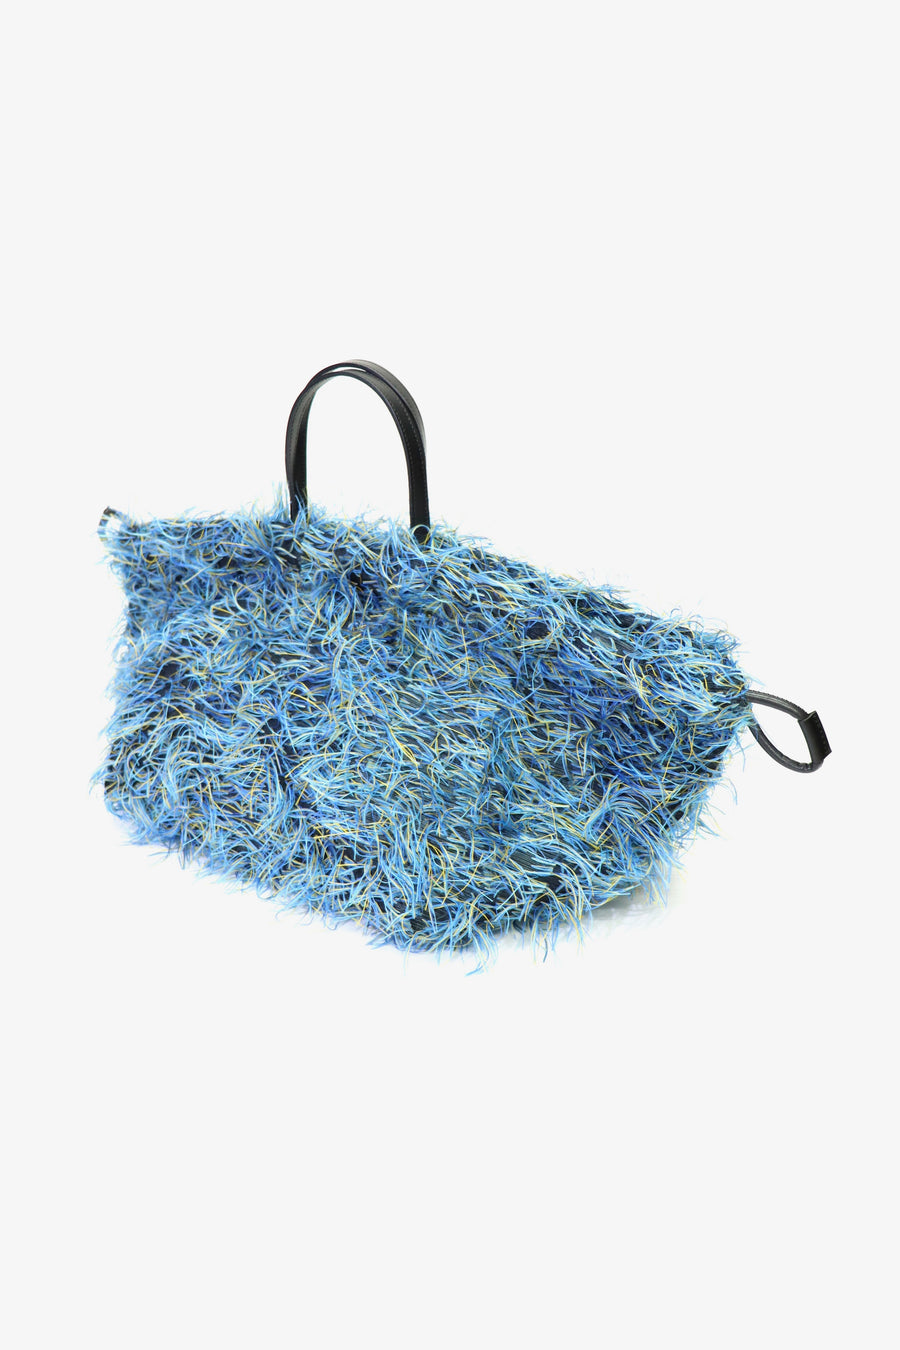 LASTFRAME  SHAGGY KINCHAKU BAG MEDIUM(BLUE)